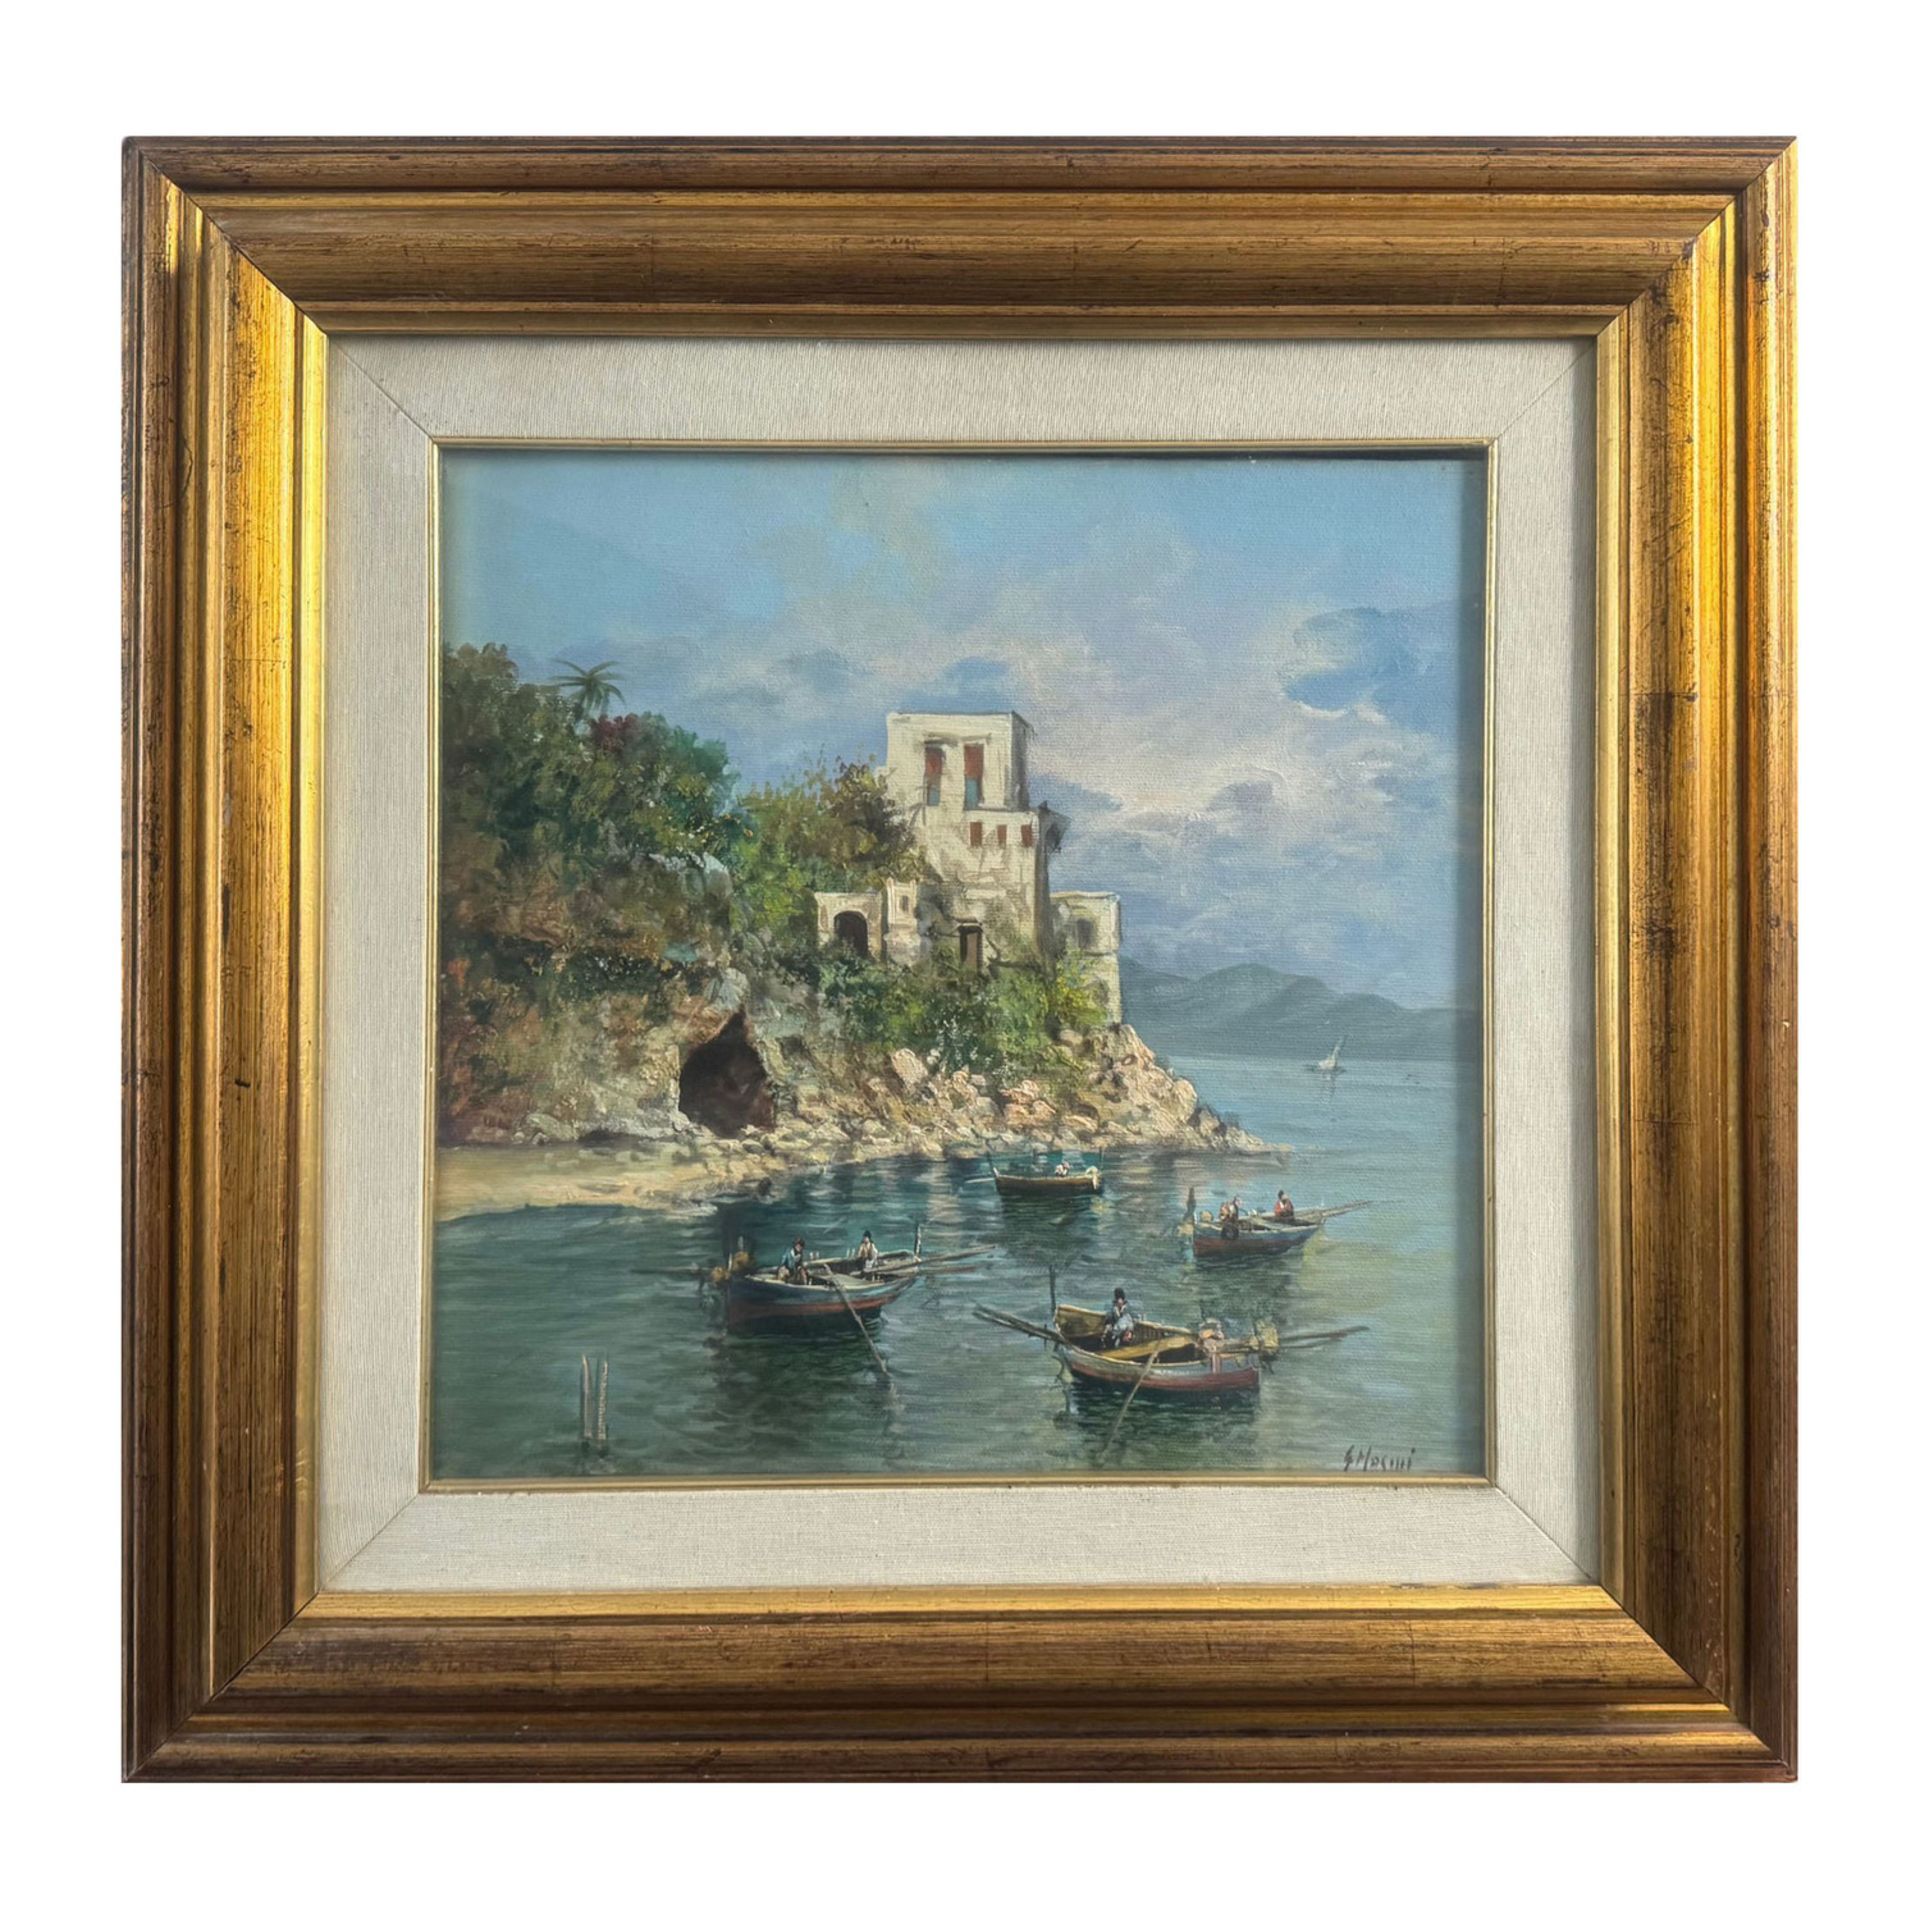 G. Masini - Glimpse of the seaside with boats